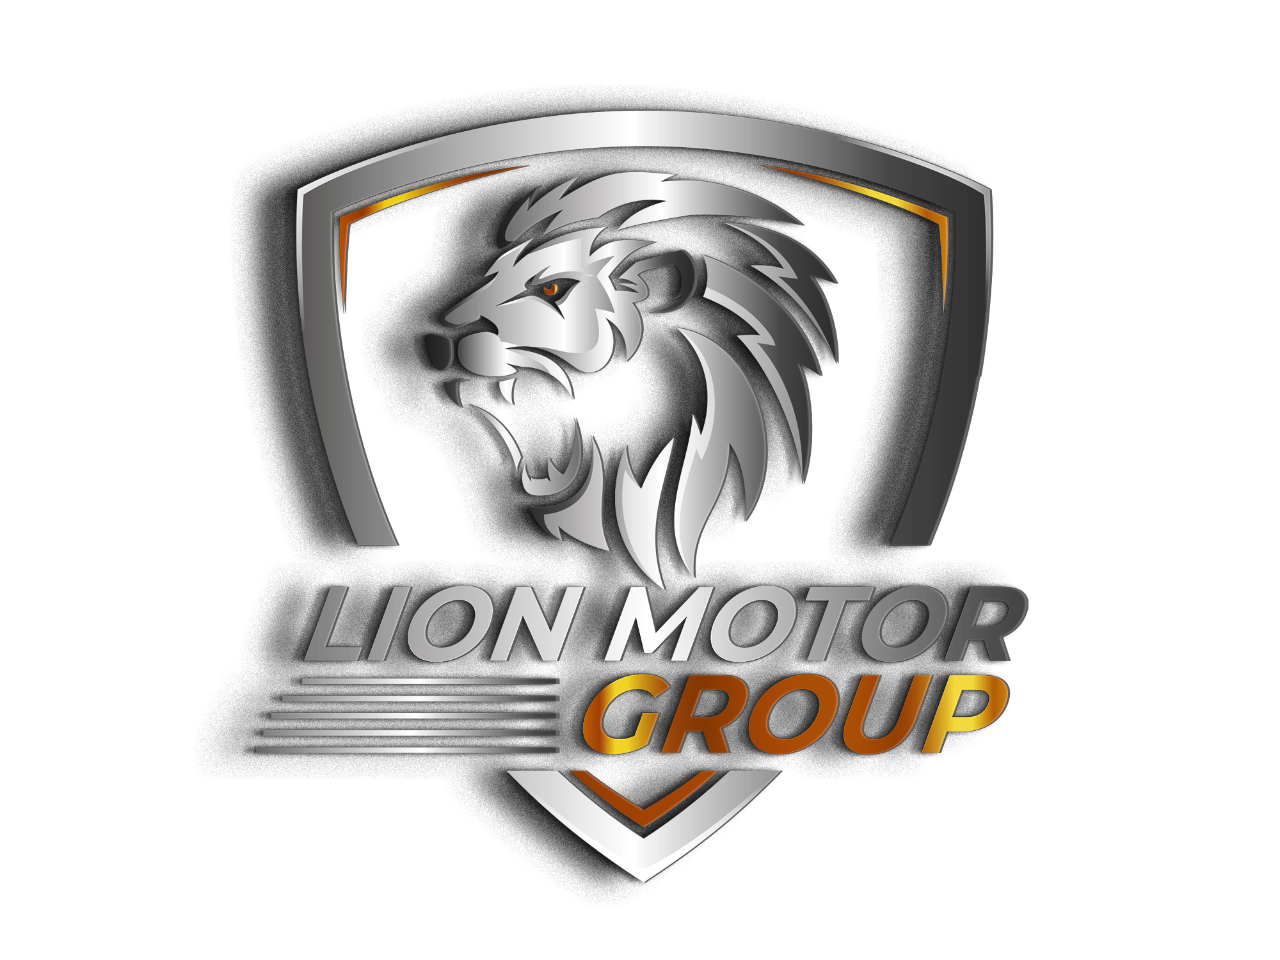 LION MOTOR GROUP